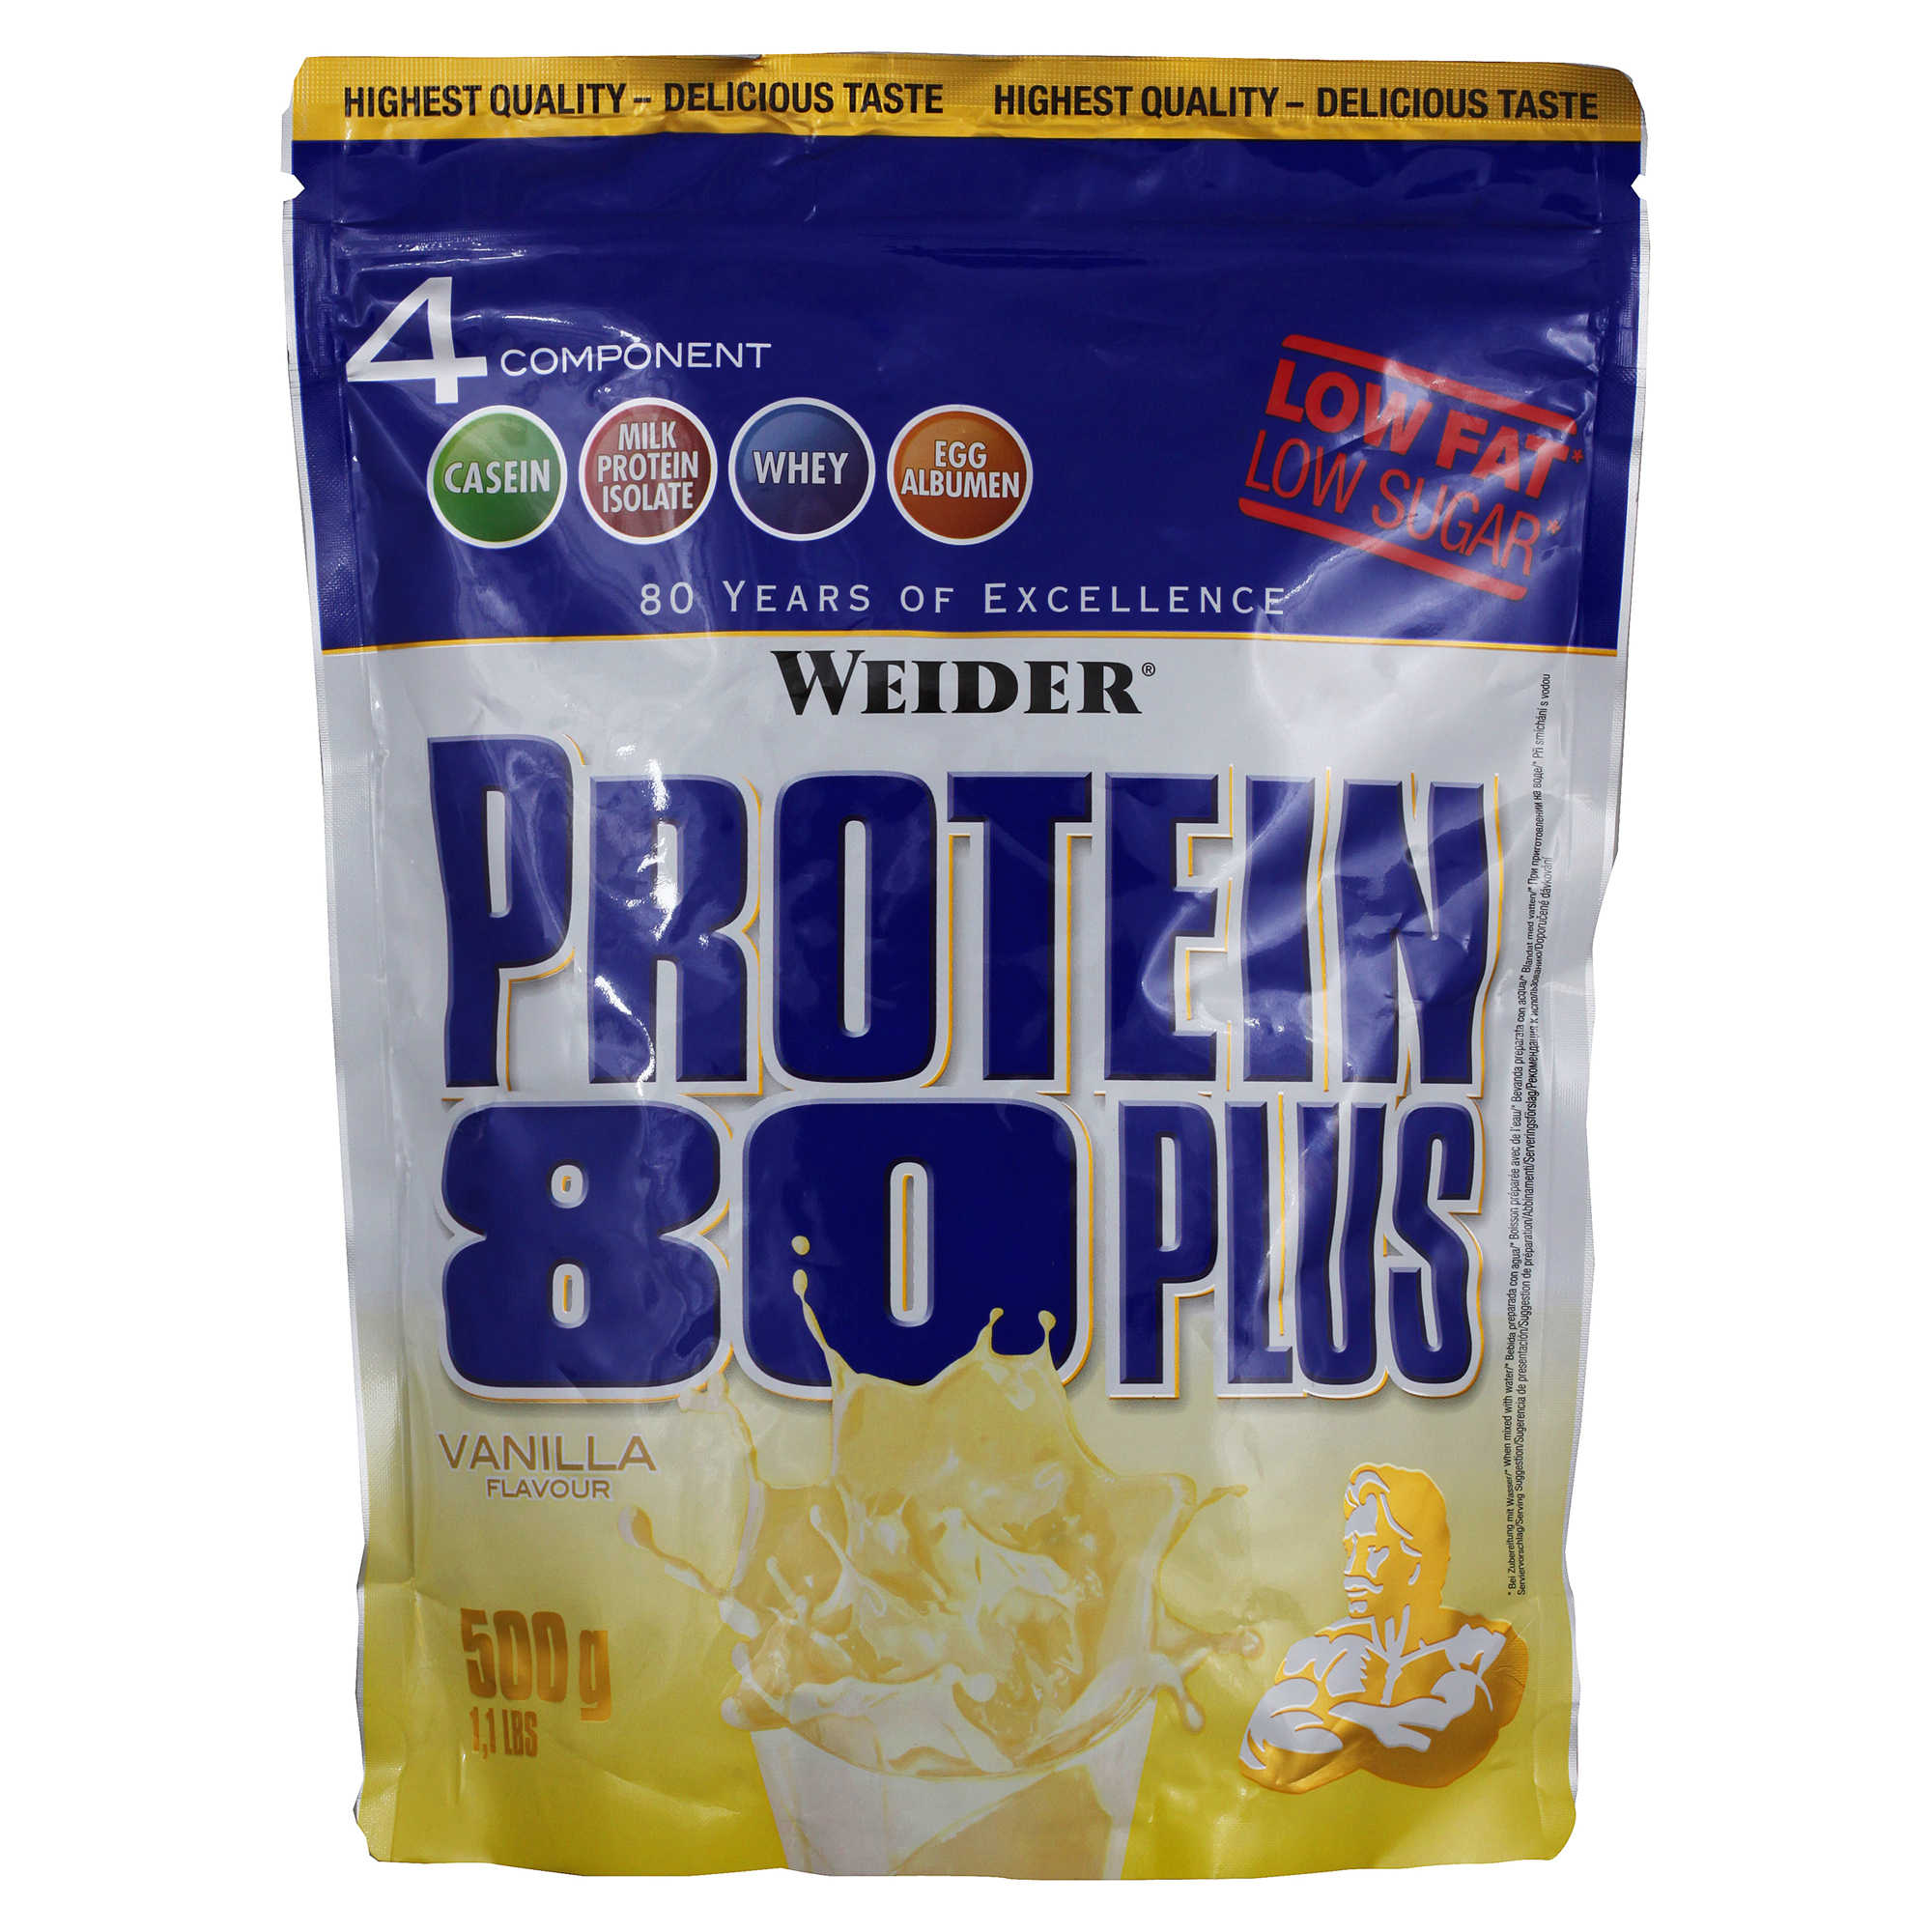 100% casein protein от optimum nutrition : отзывы, состав и как принимать протеин